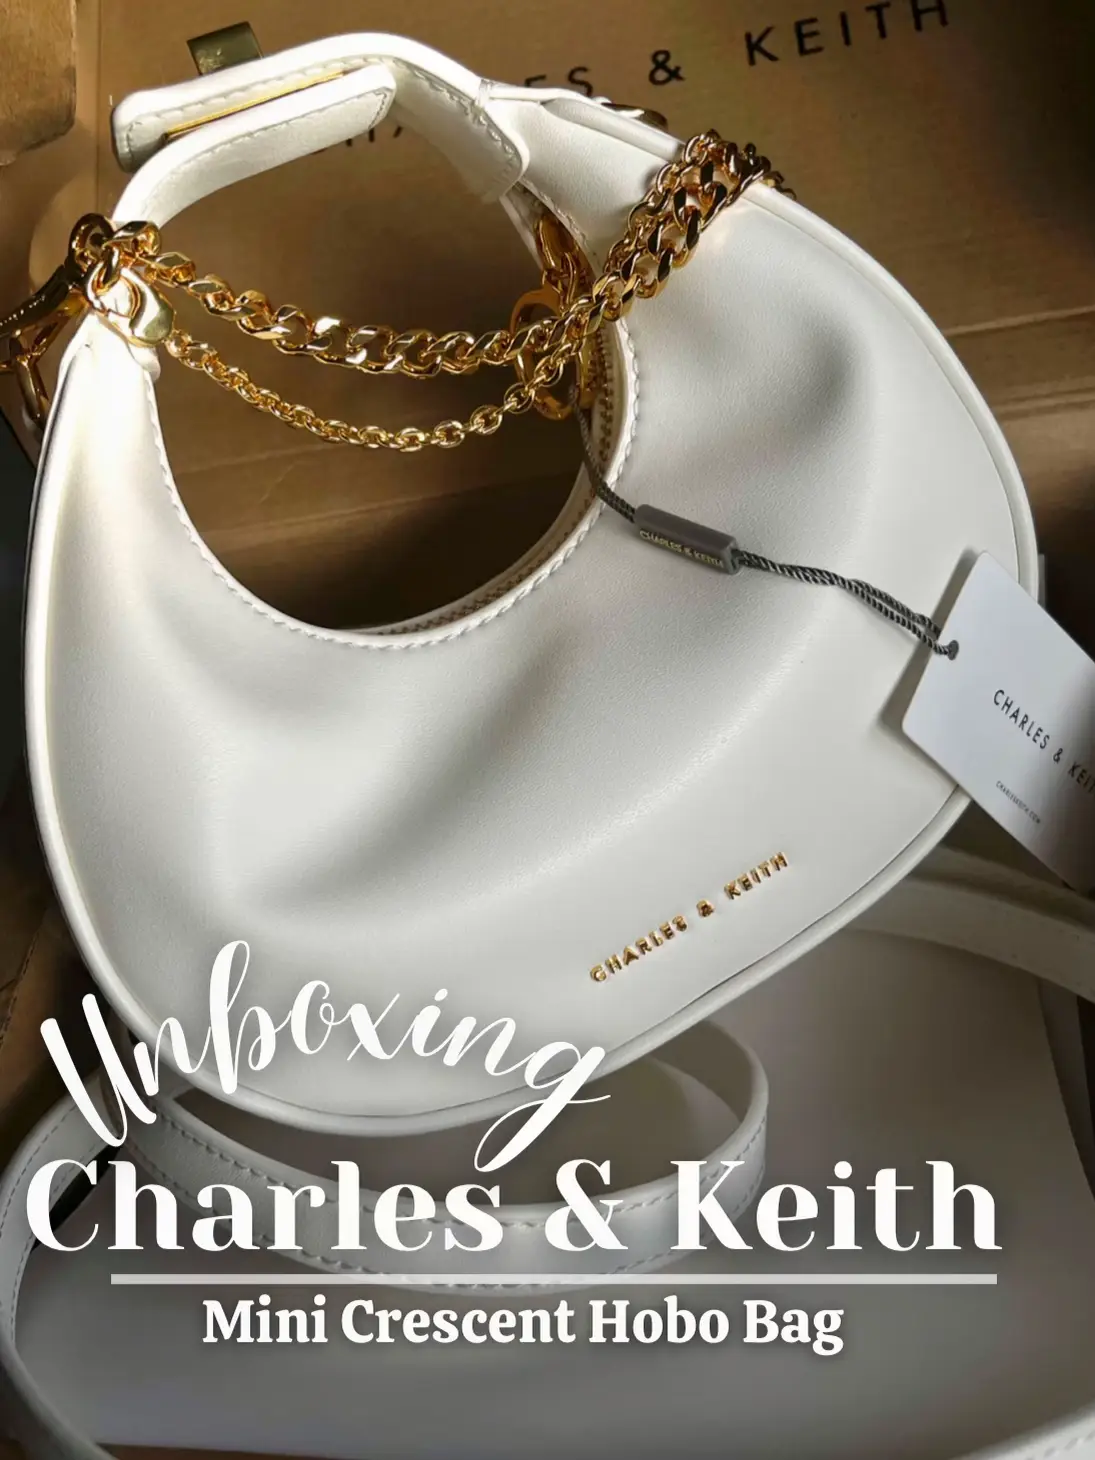 Charles & Keith Gabine Saddle Bag (Dark Brown) unboxing & review 